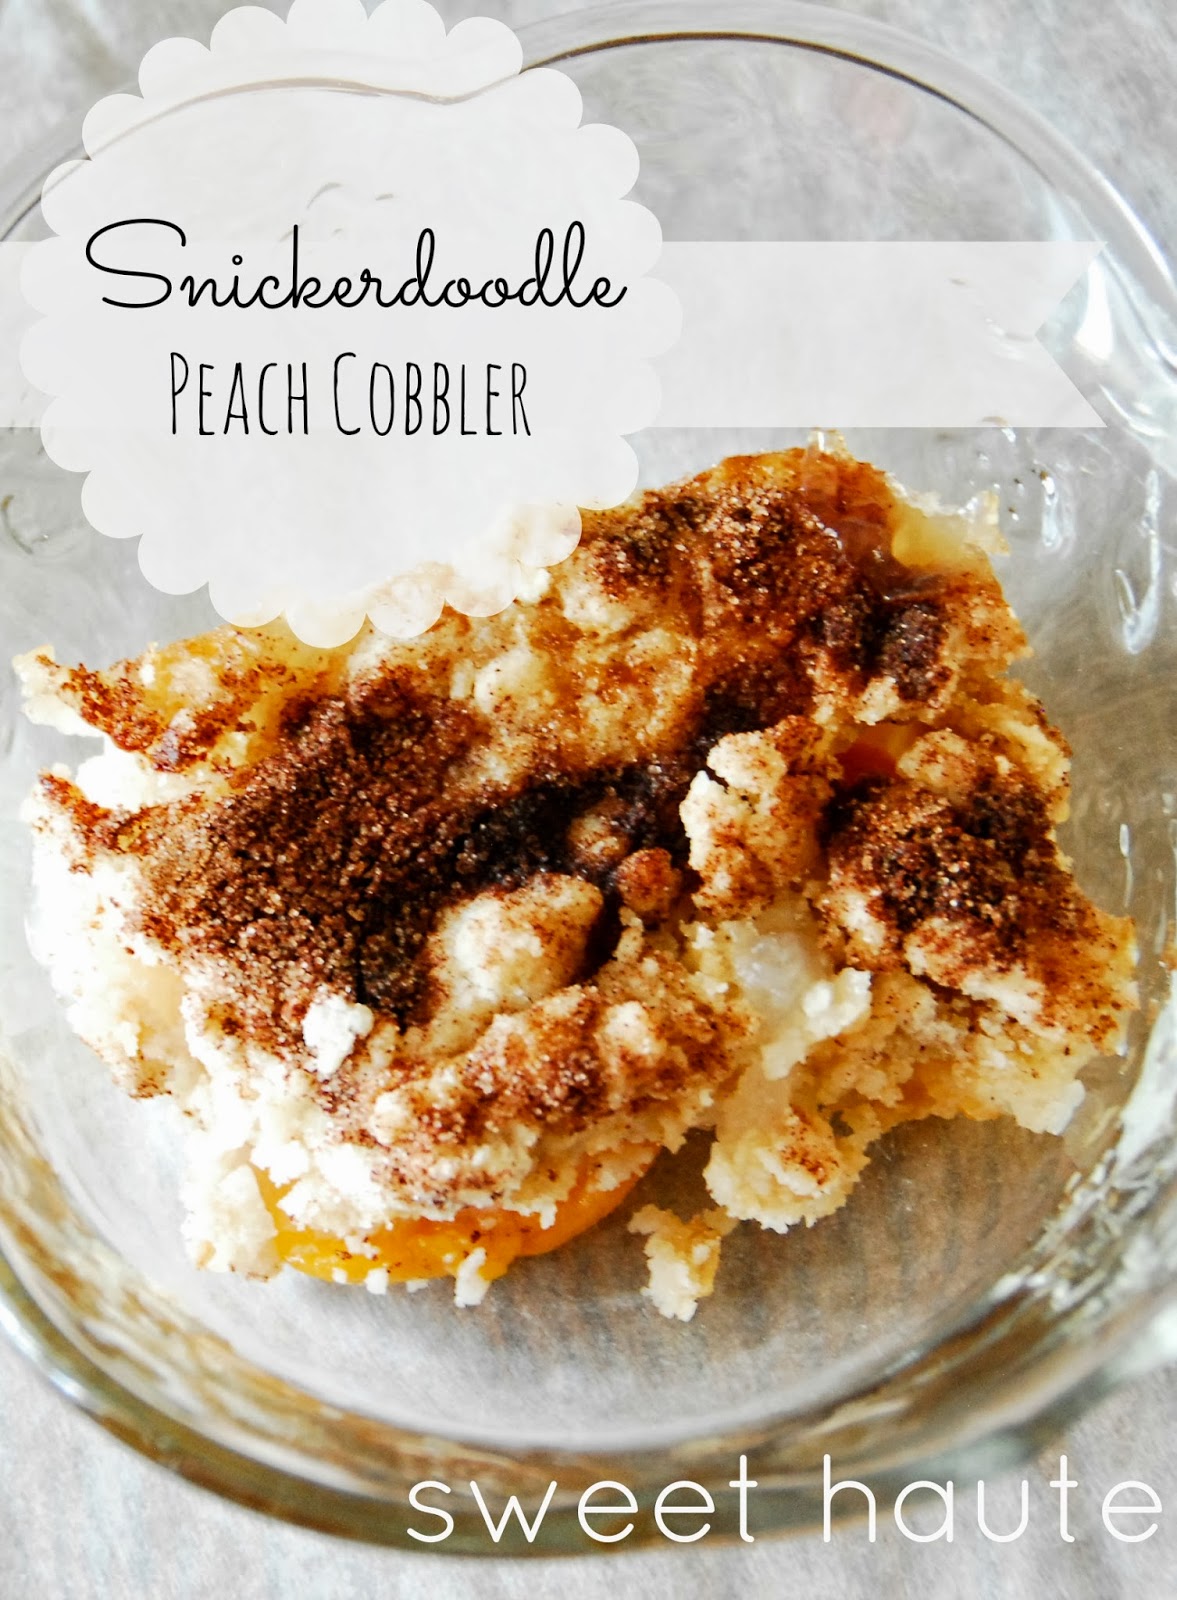 http://sweethaute.blogspot.com/2014/02/snickerdoodle-peach-cobbler-recipe-sweet.html